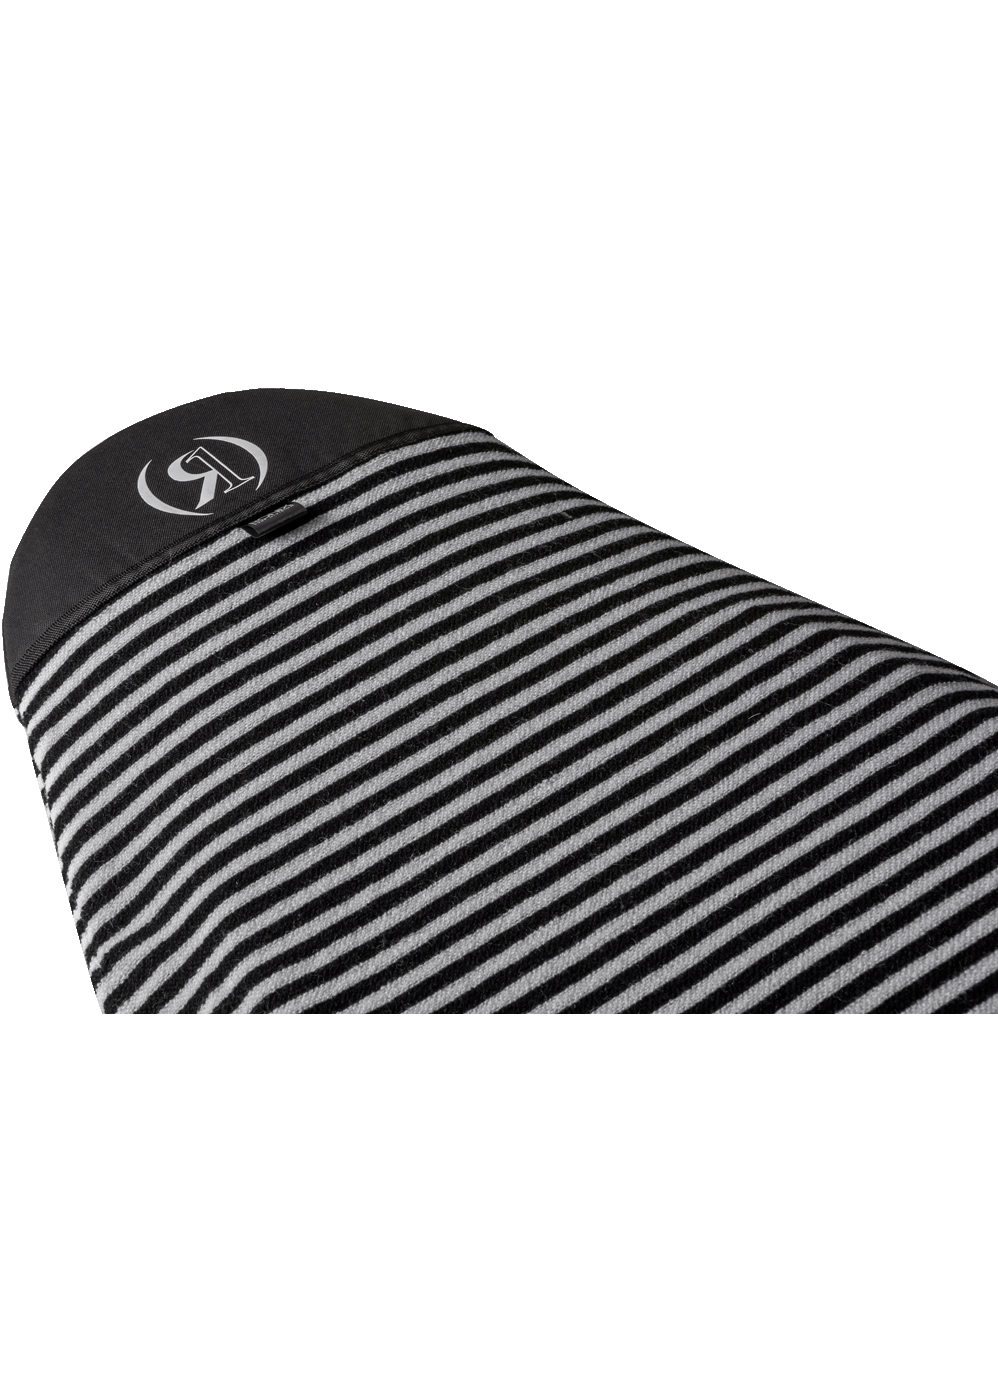 2022 Ronix Bags Surf Sock Inset 4 copy